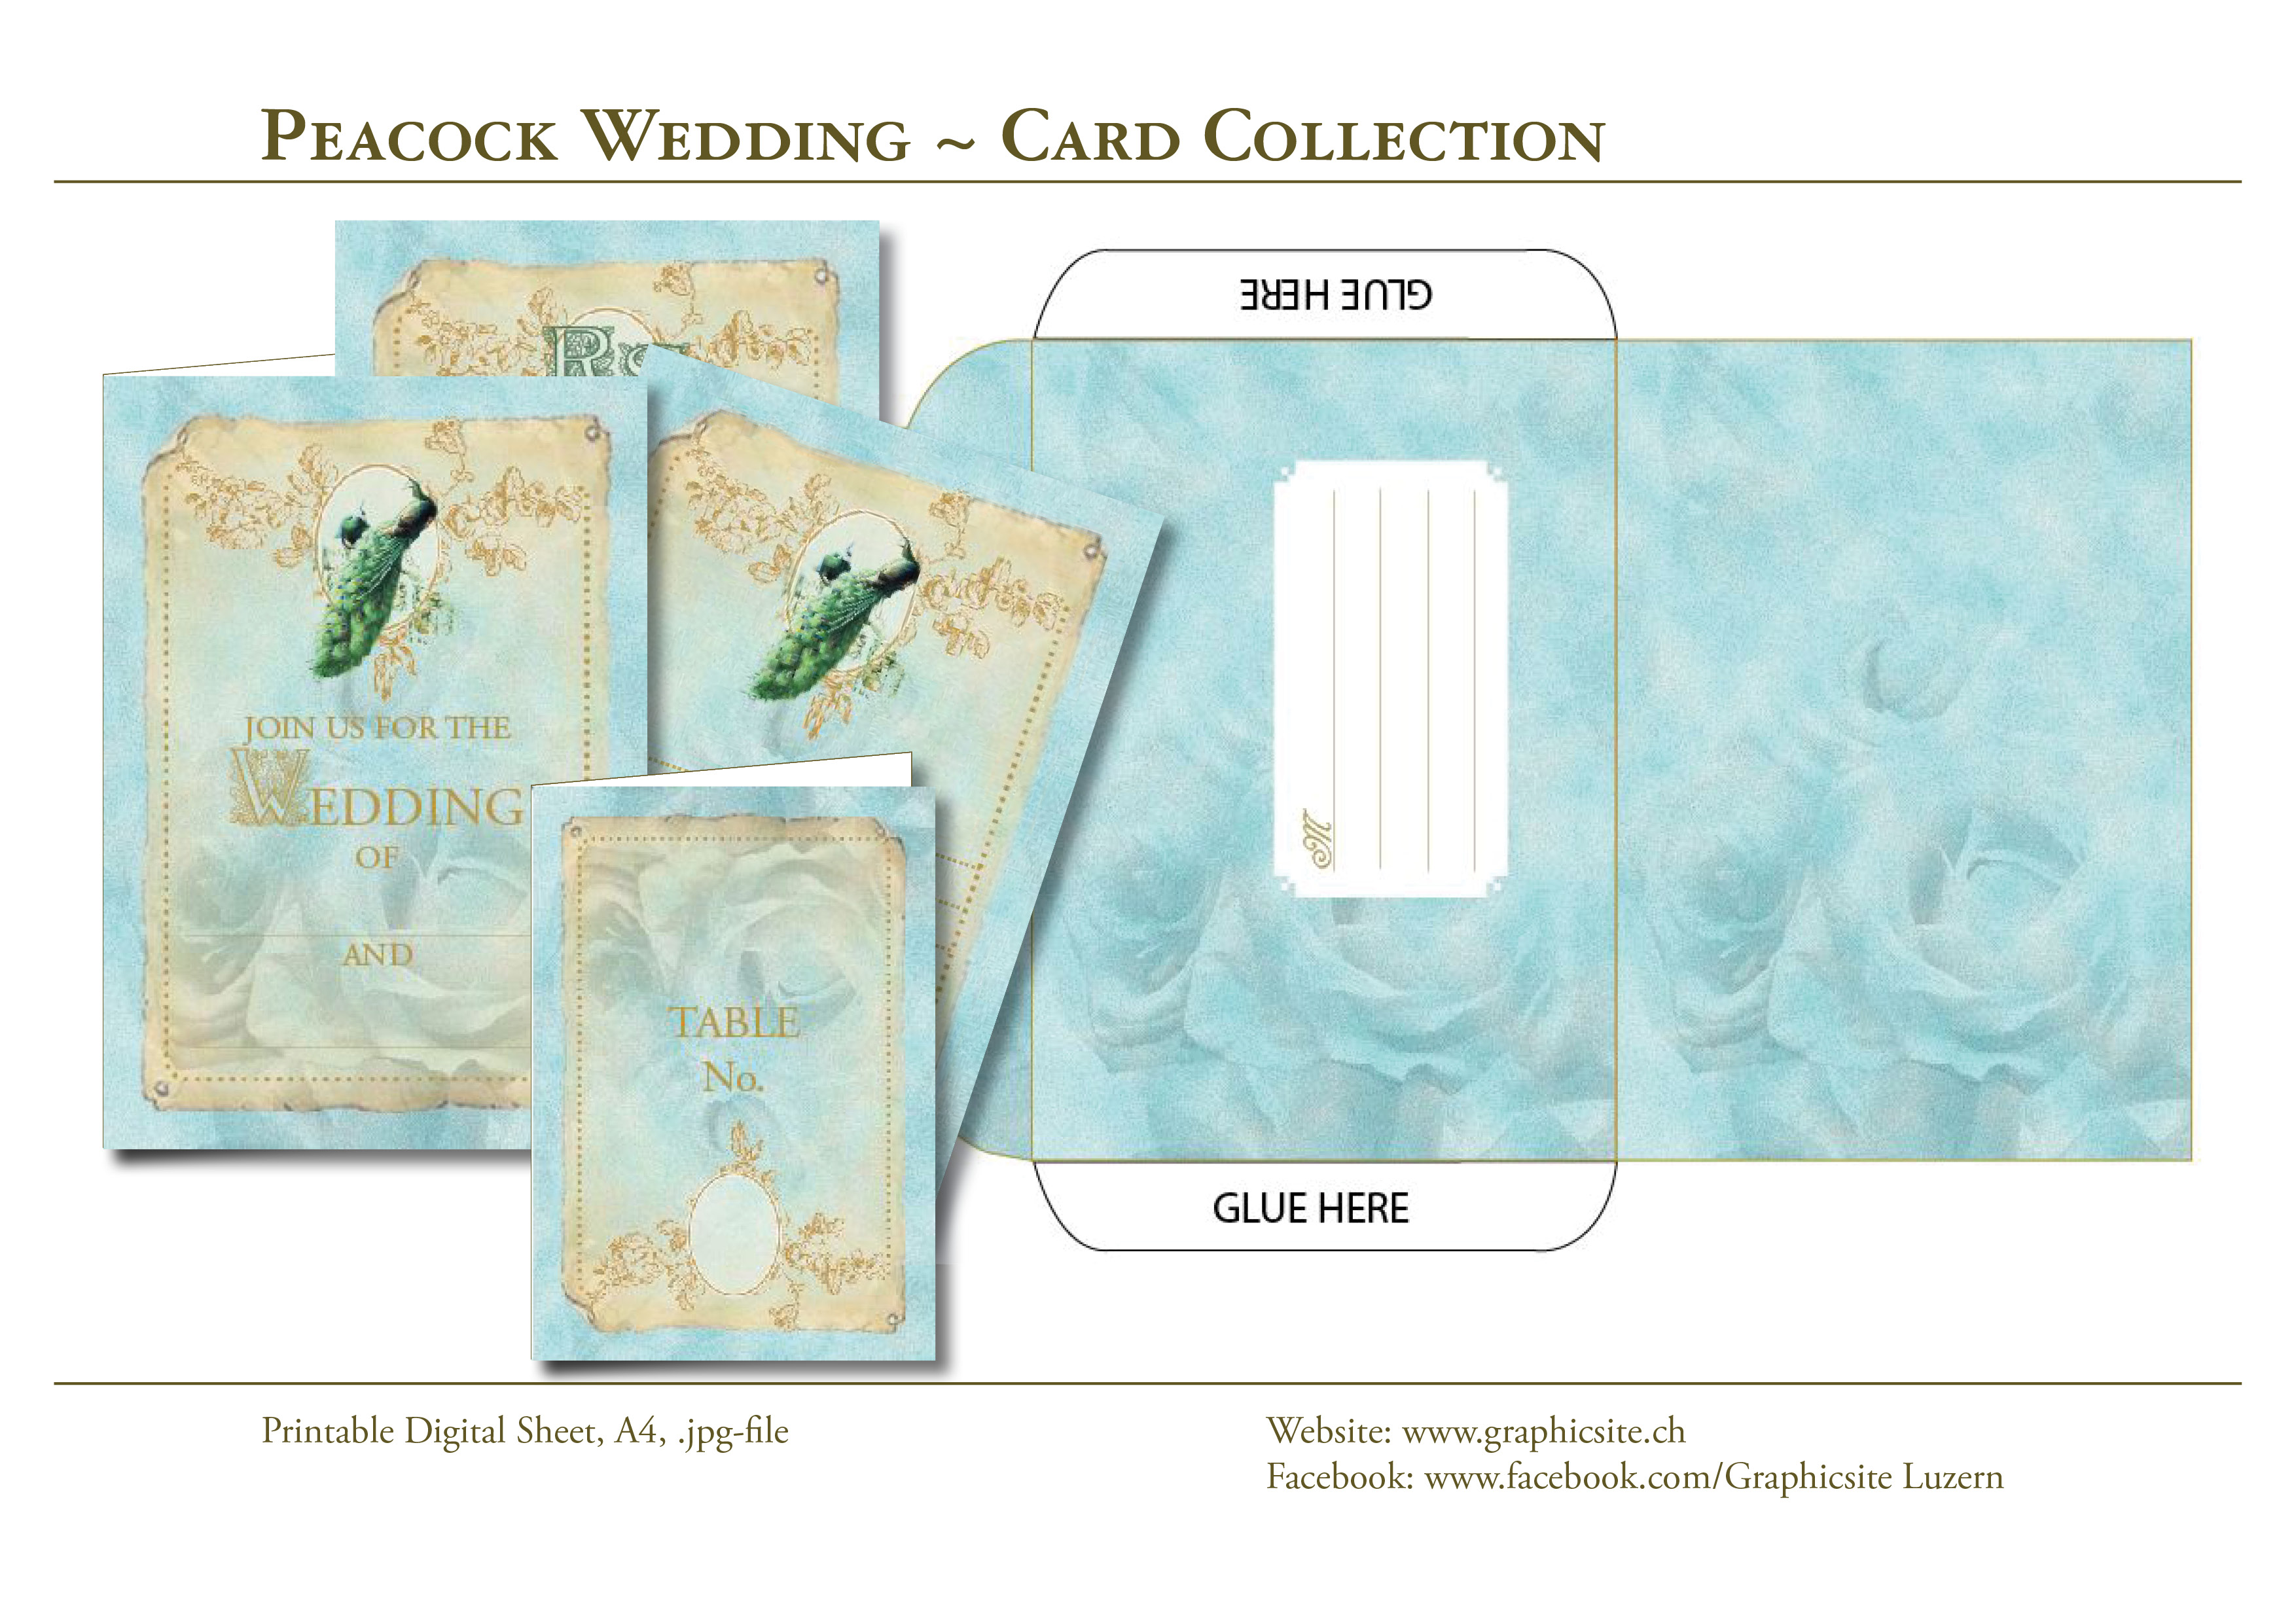 Printable Digital Sheets - DIN A - PeacockWedding - Card Collection - Invitation, Invite, Cards, RSVP, Envelope, Graphic Design Luzern, Schweiz